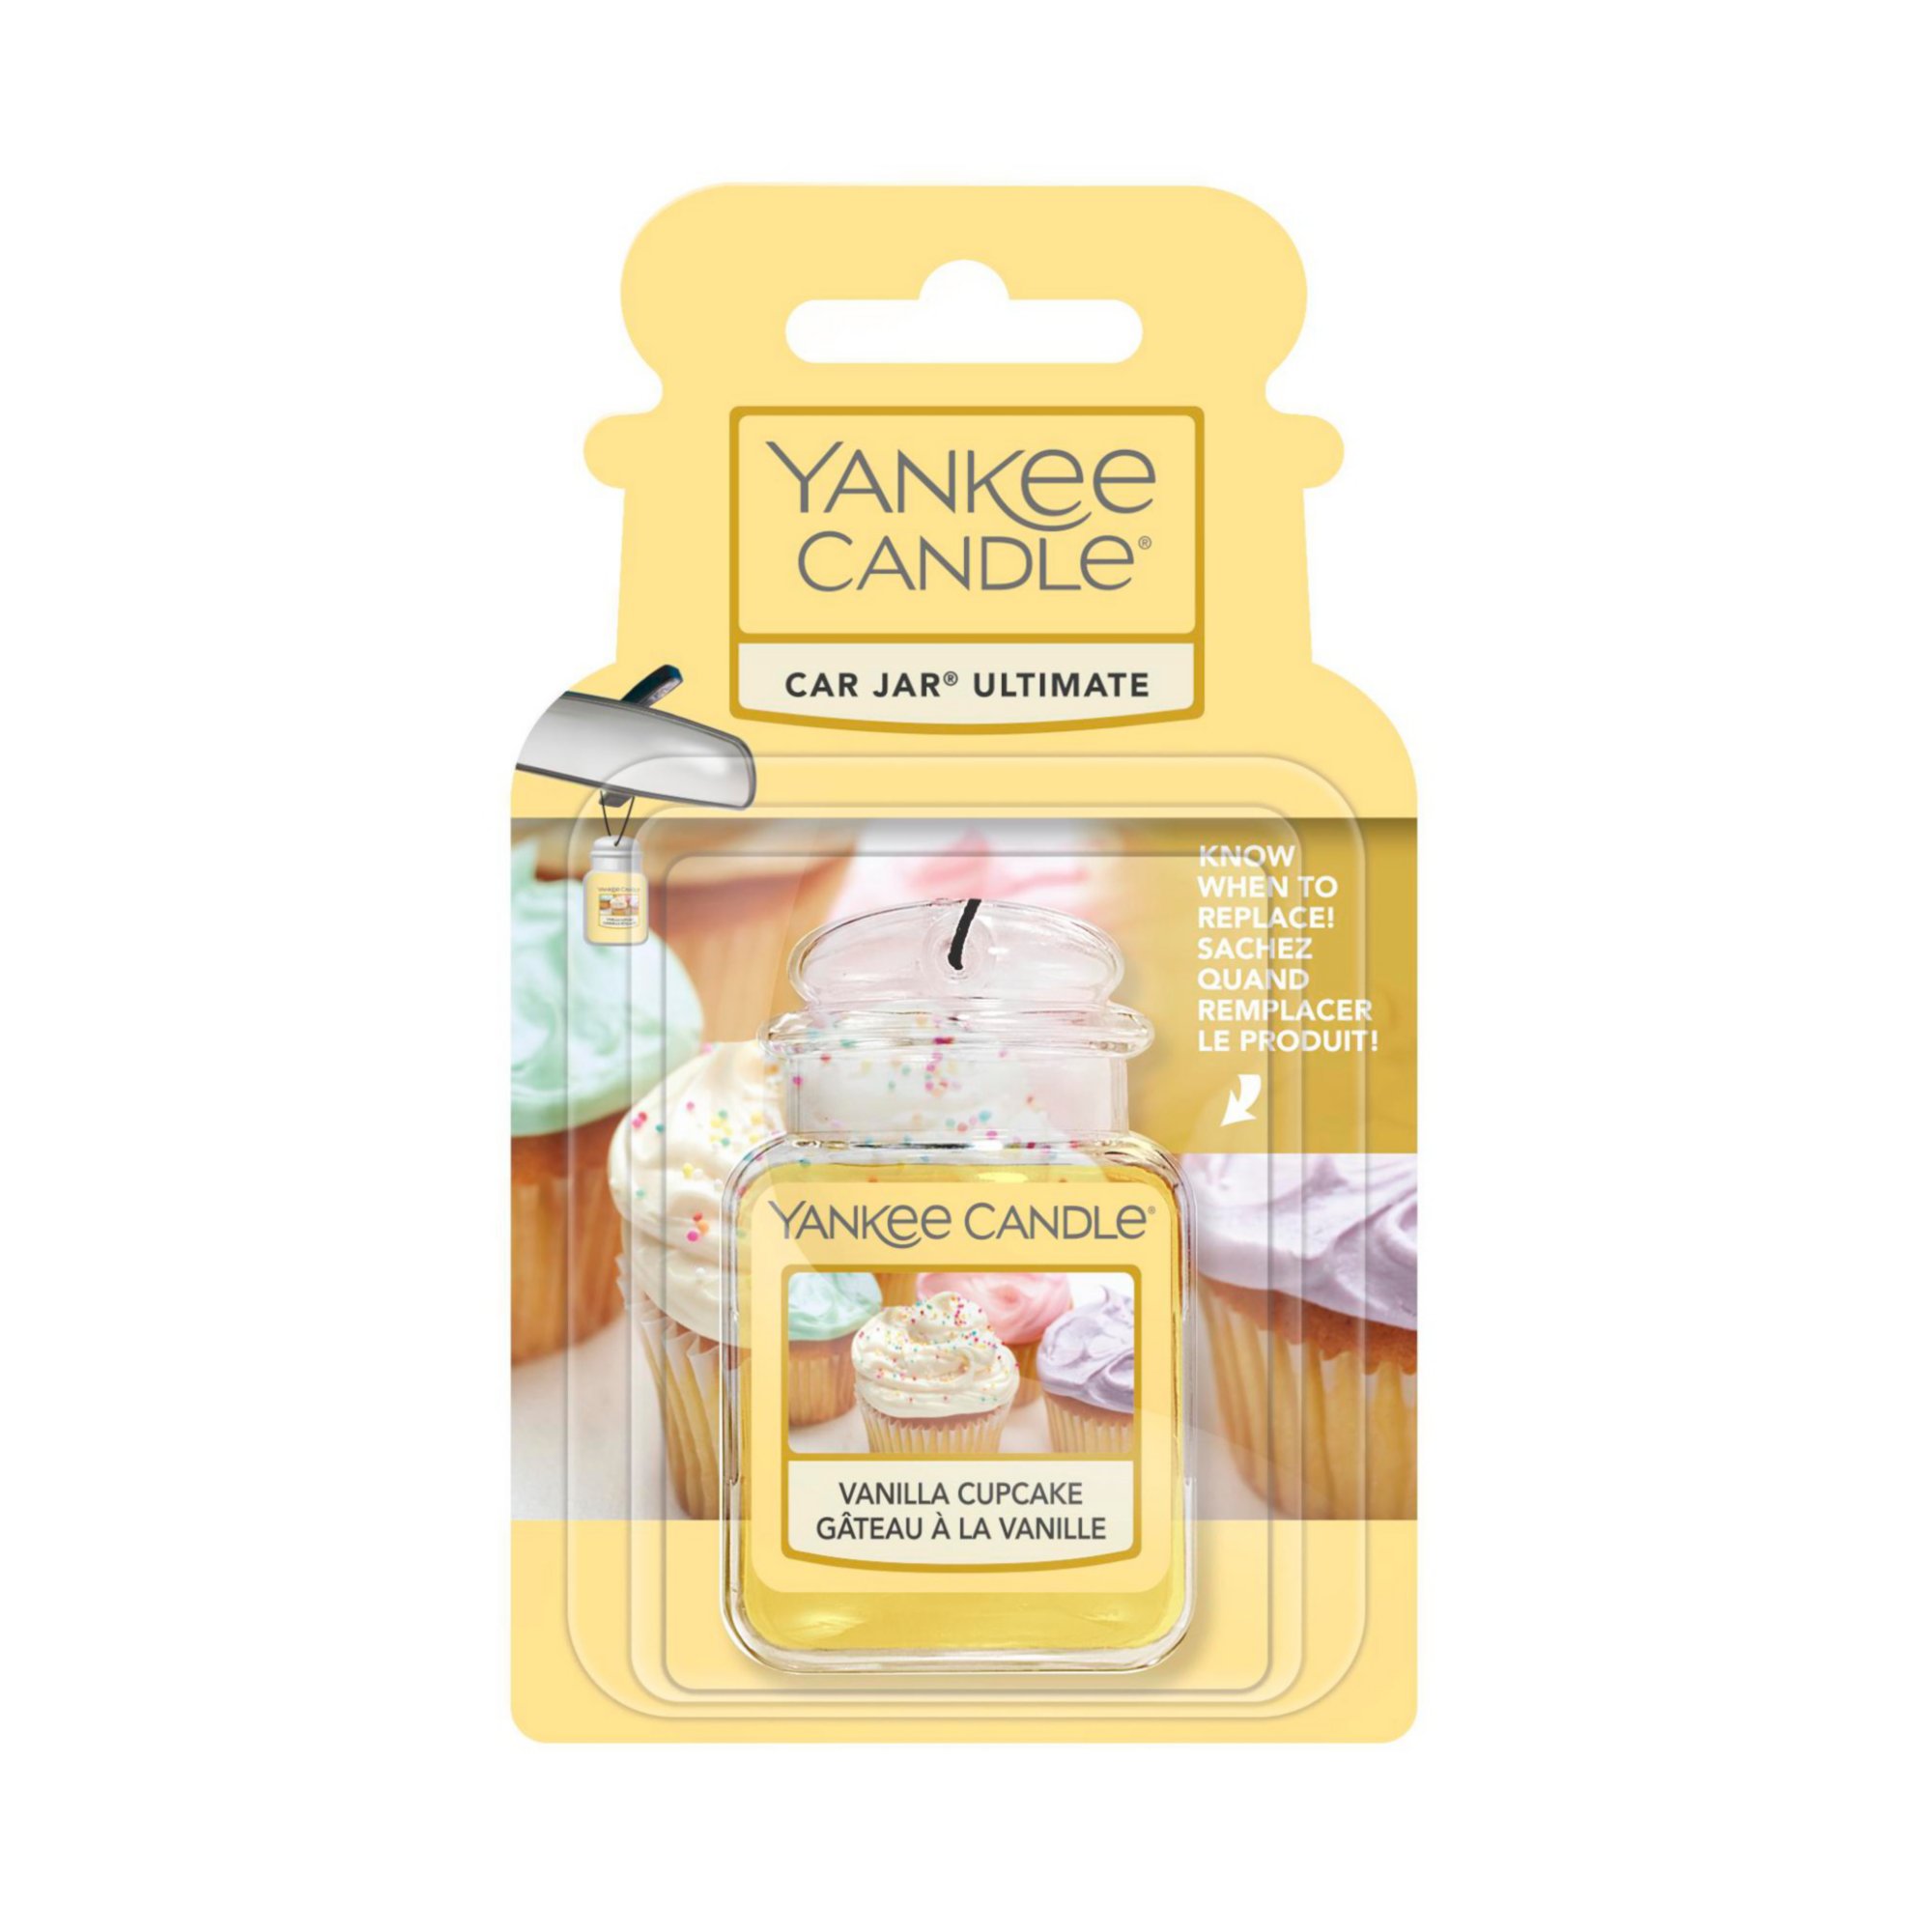 Yankee Candle Car Jar Vanilla Cupcake - Car Air Freshener